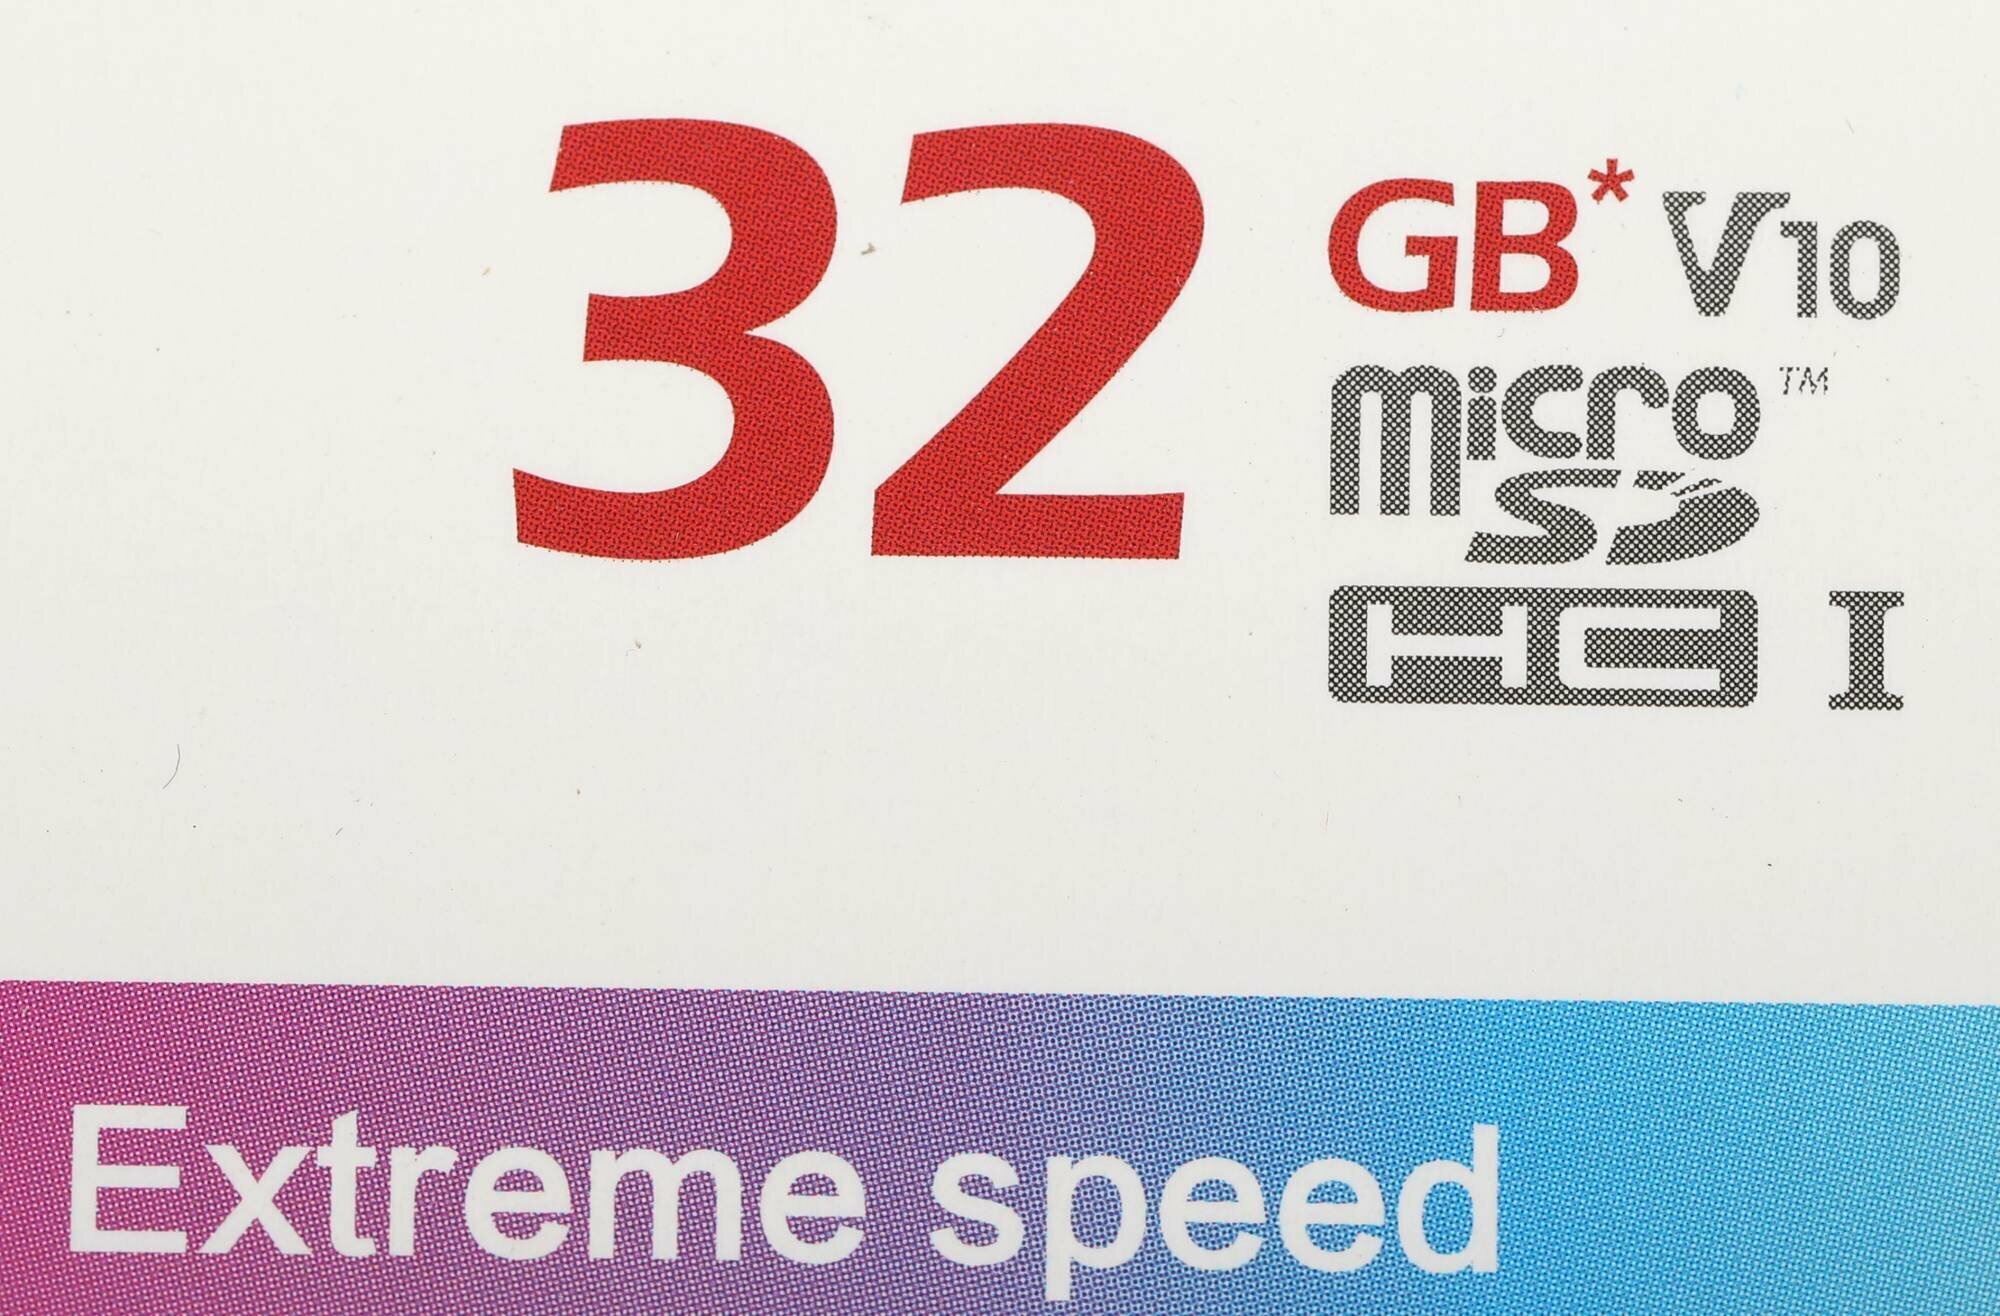 Флеш карта microSDHC 32GB Hikvision HS-TF-C1(STD)/32G/Adapter (с SD адаптером) R/W Speed 92/20MB/s  V10